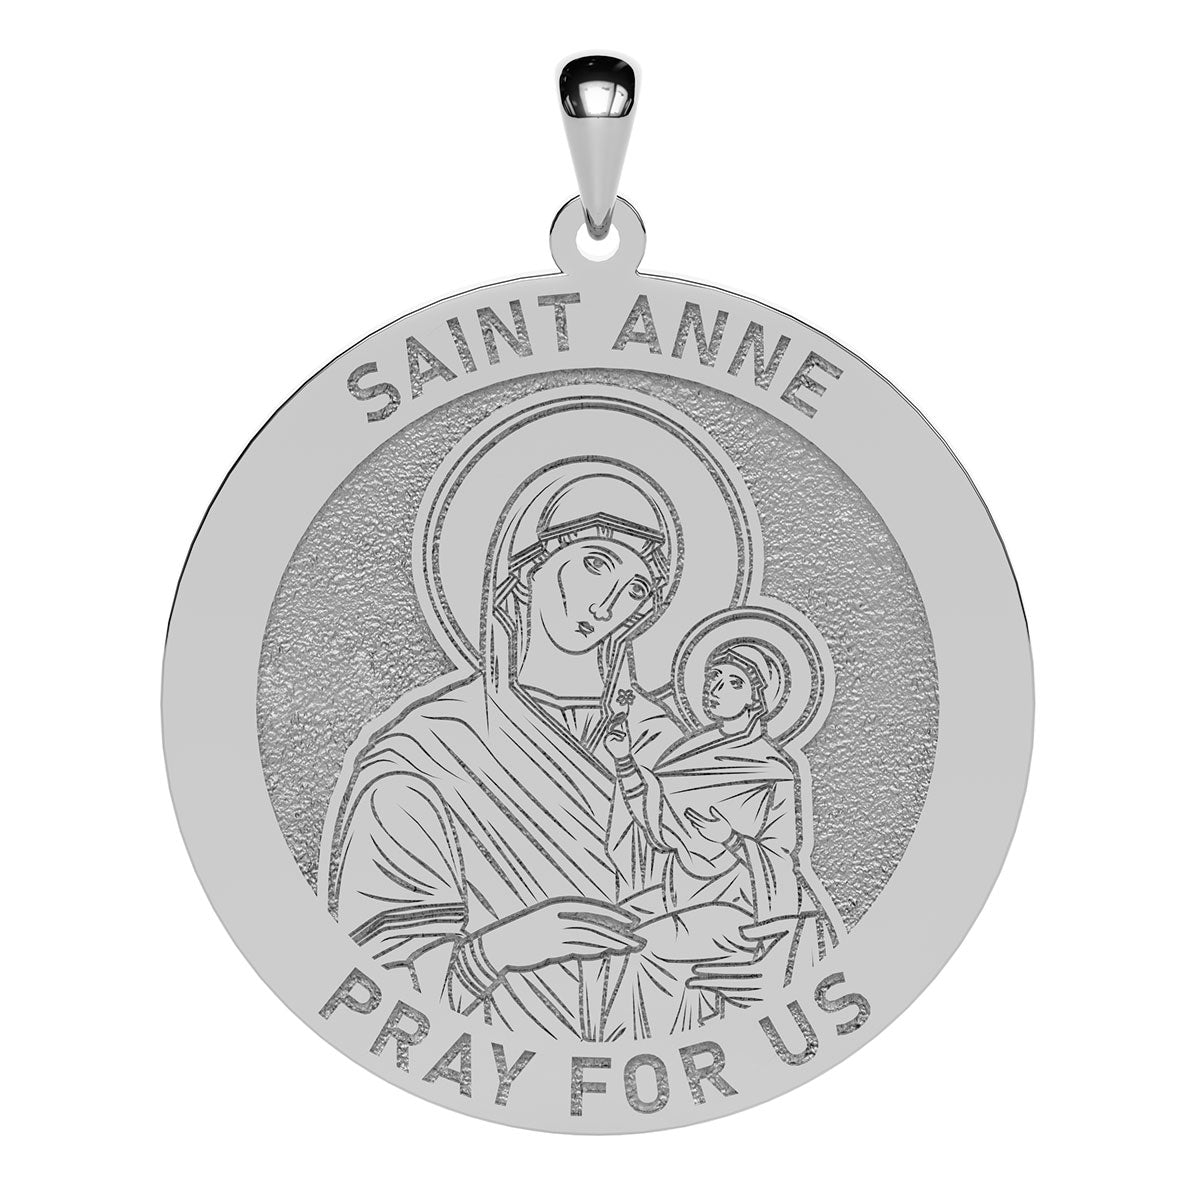 Saint Anne Round Religious Medal